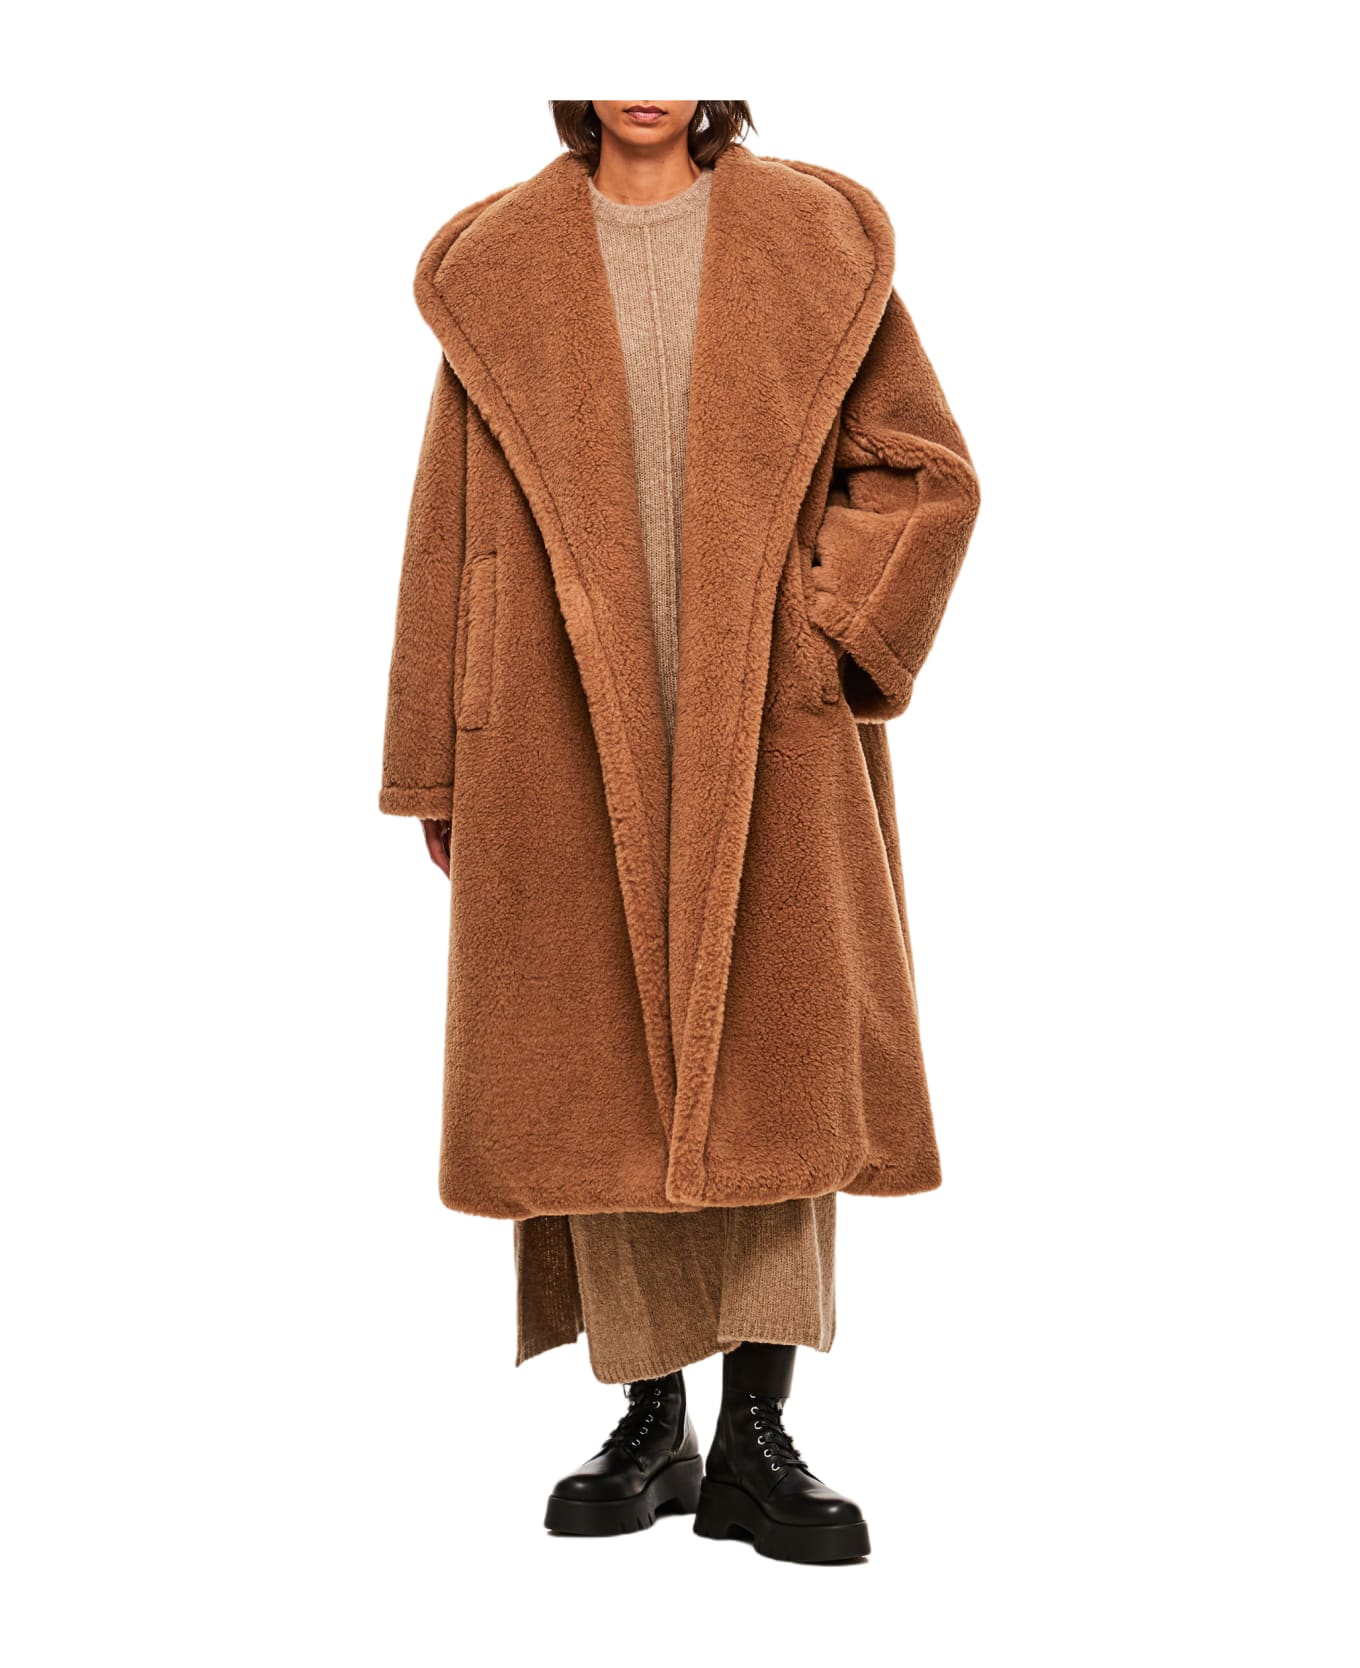 Max Mara Apogeo Coat In Camel - Brown